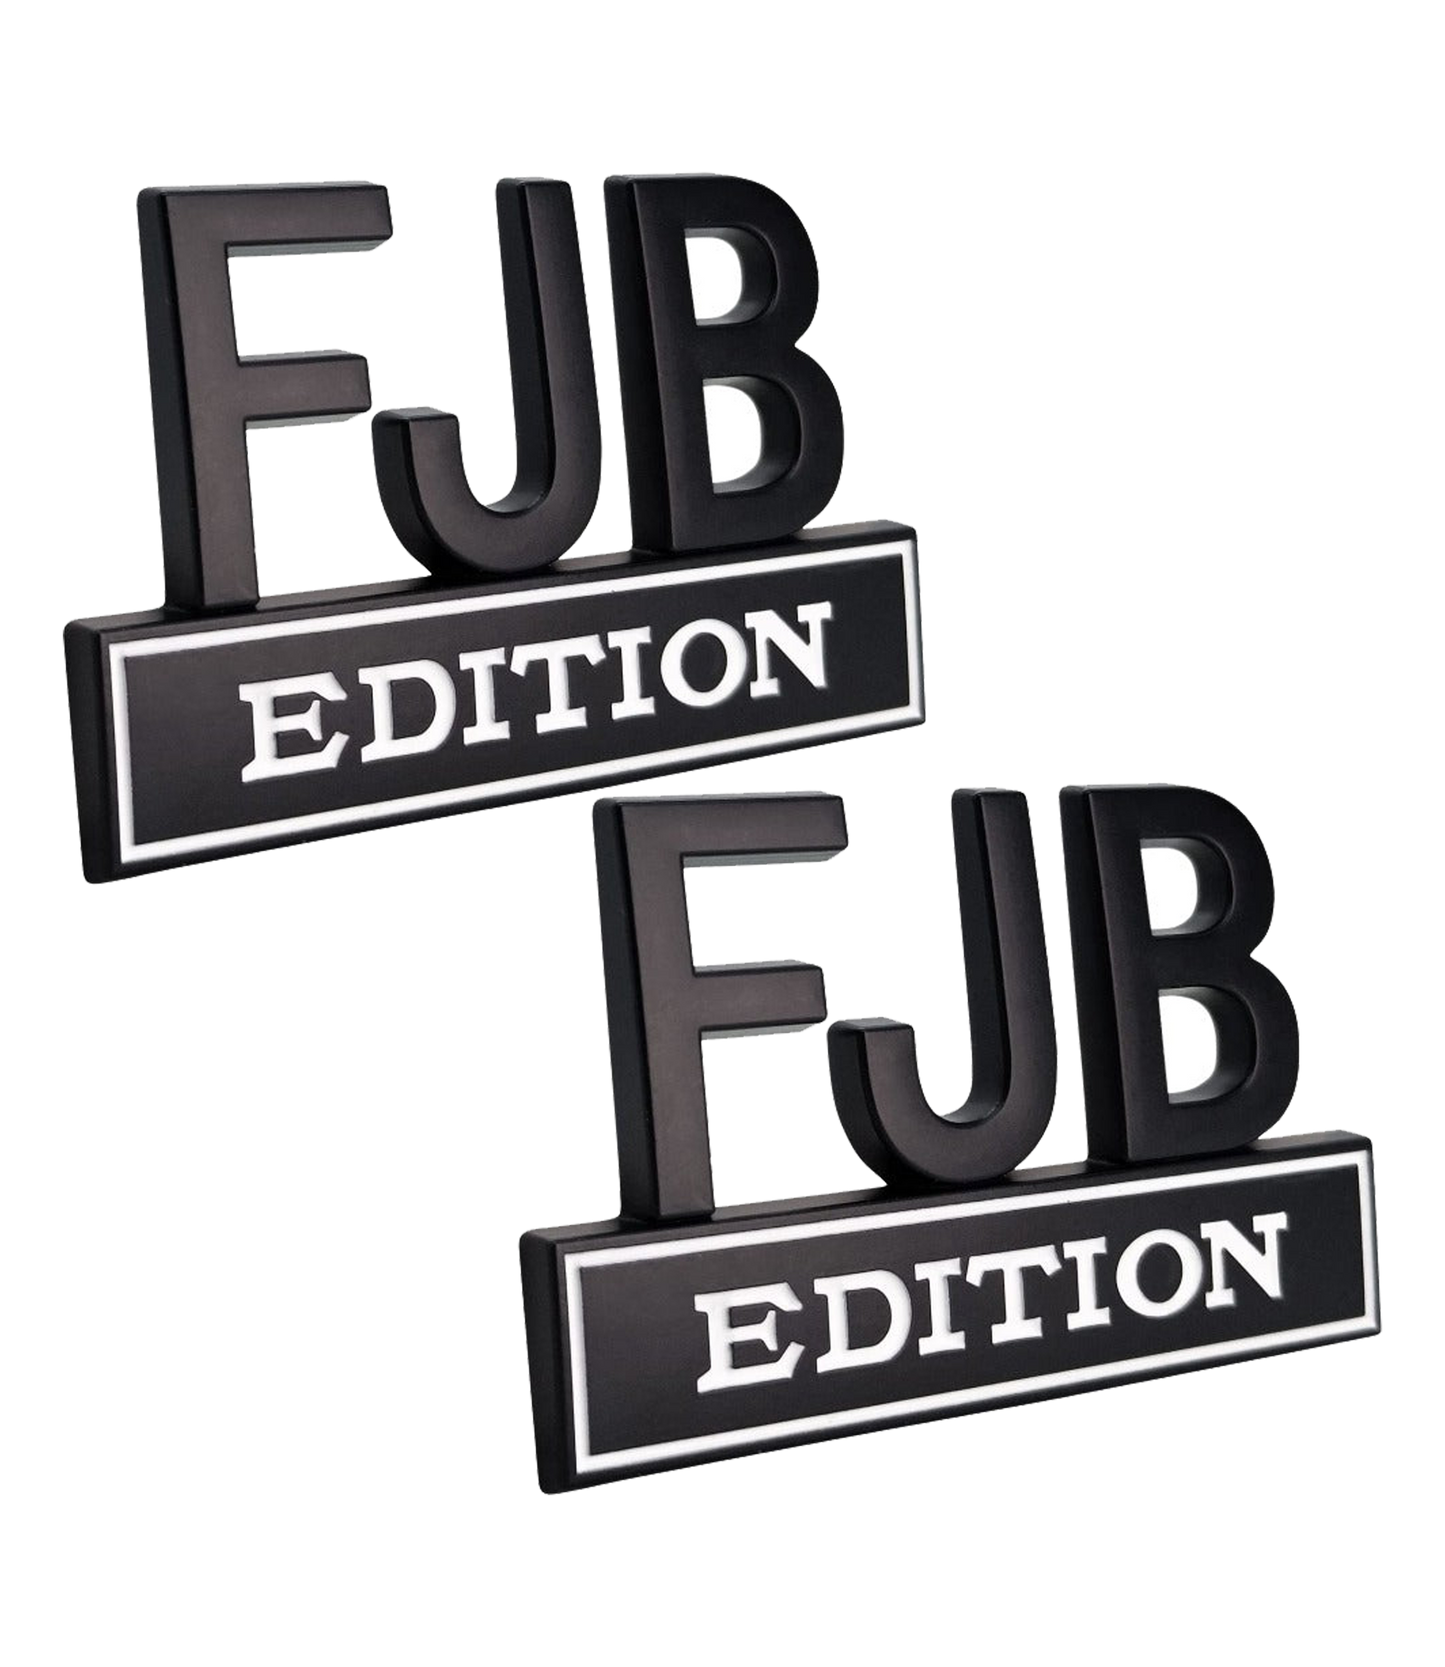 FJB Edition Premium Car/Truck Badge - Black